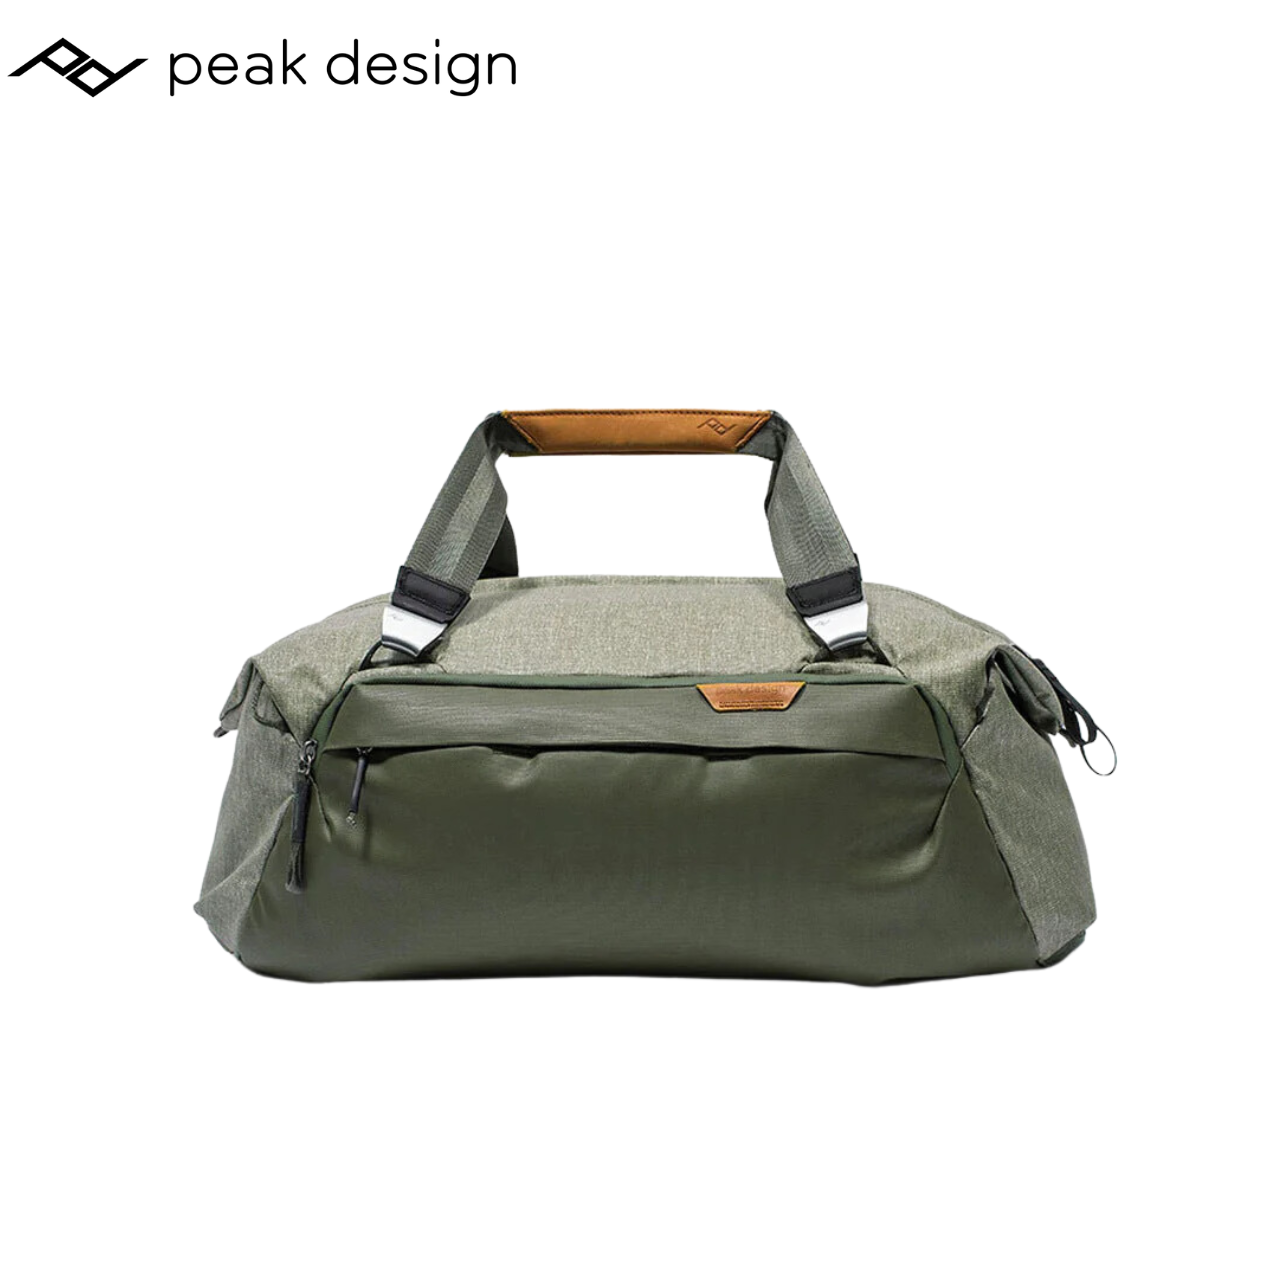 Peak Design Travel Duffel 35 L - Sage